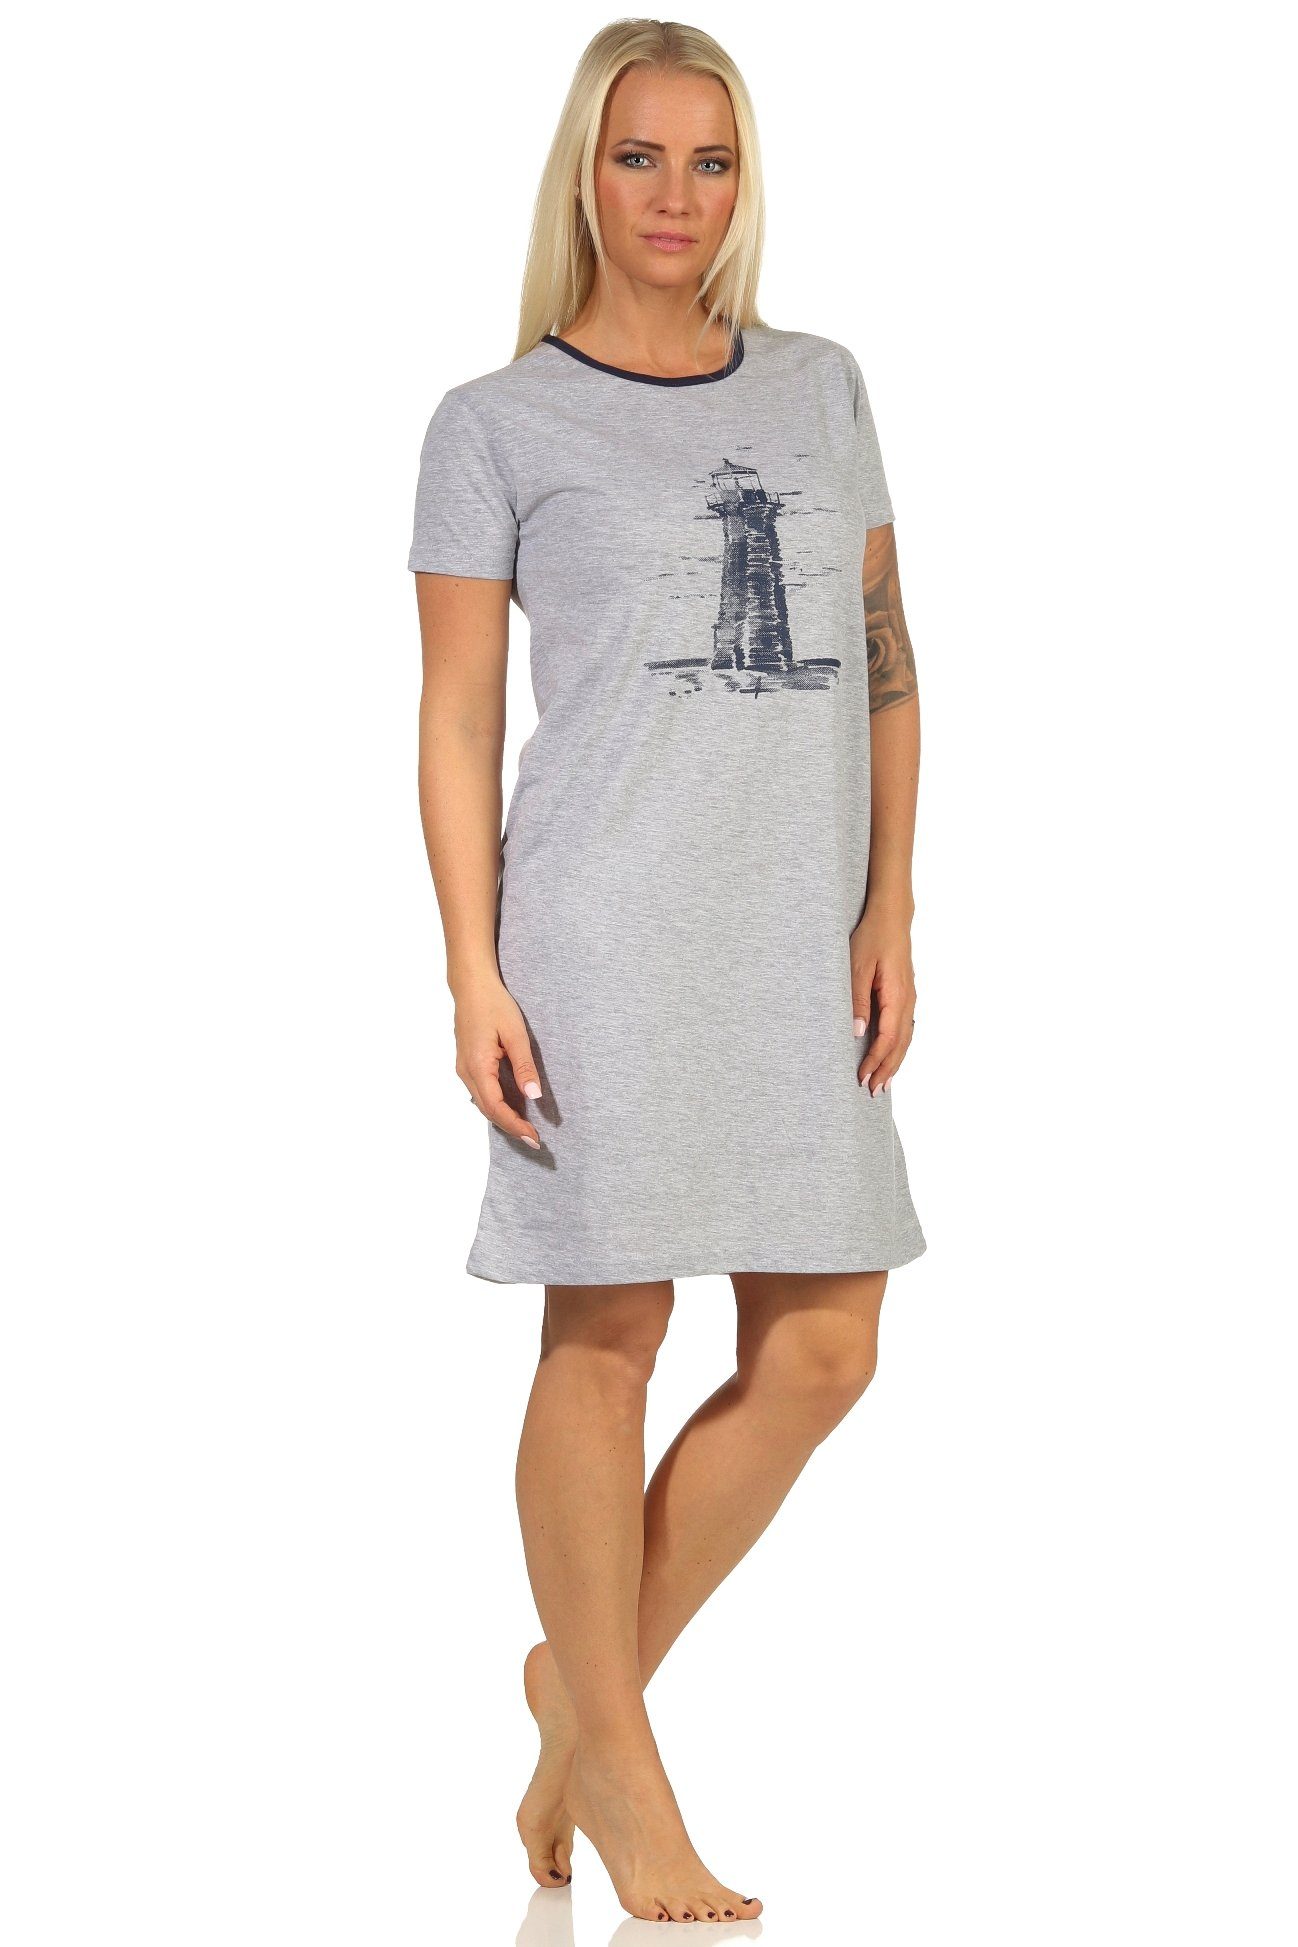 RELAX by Normann Nachthemd Damen im als Leuchtturm kurzarm Nachthemd und maritimen Motiv grau Look